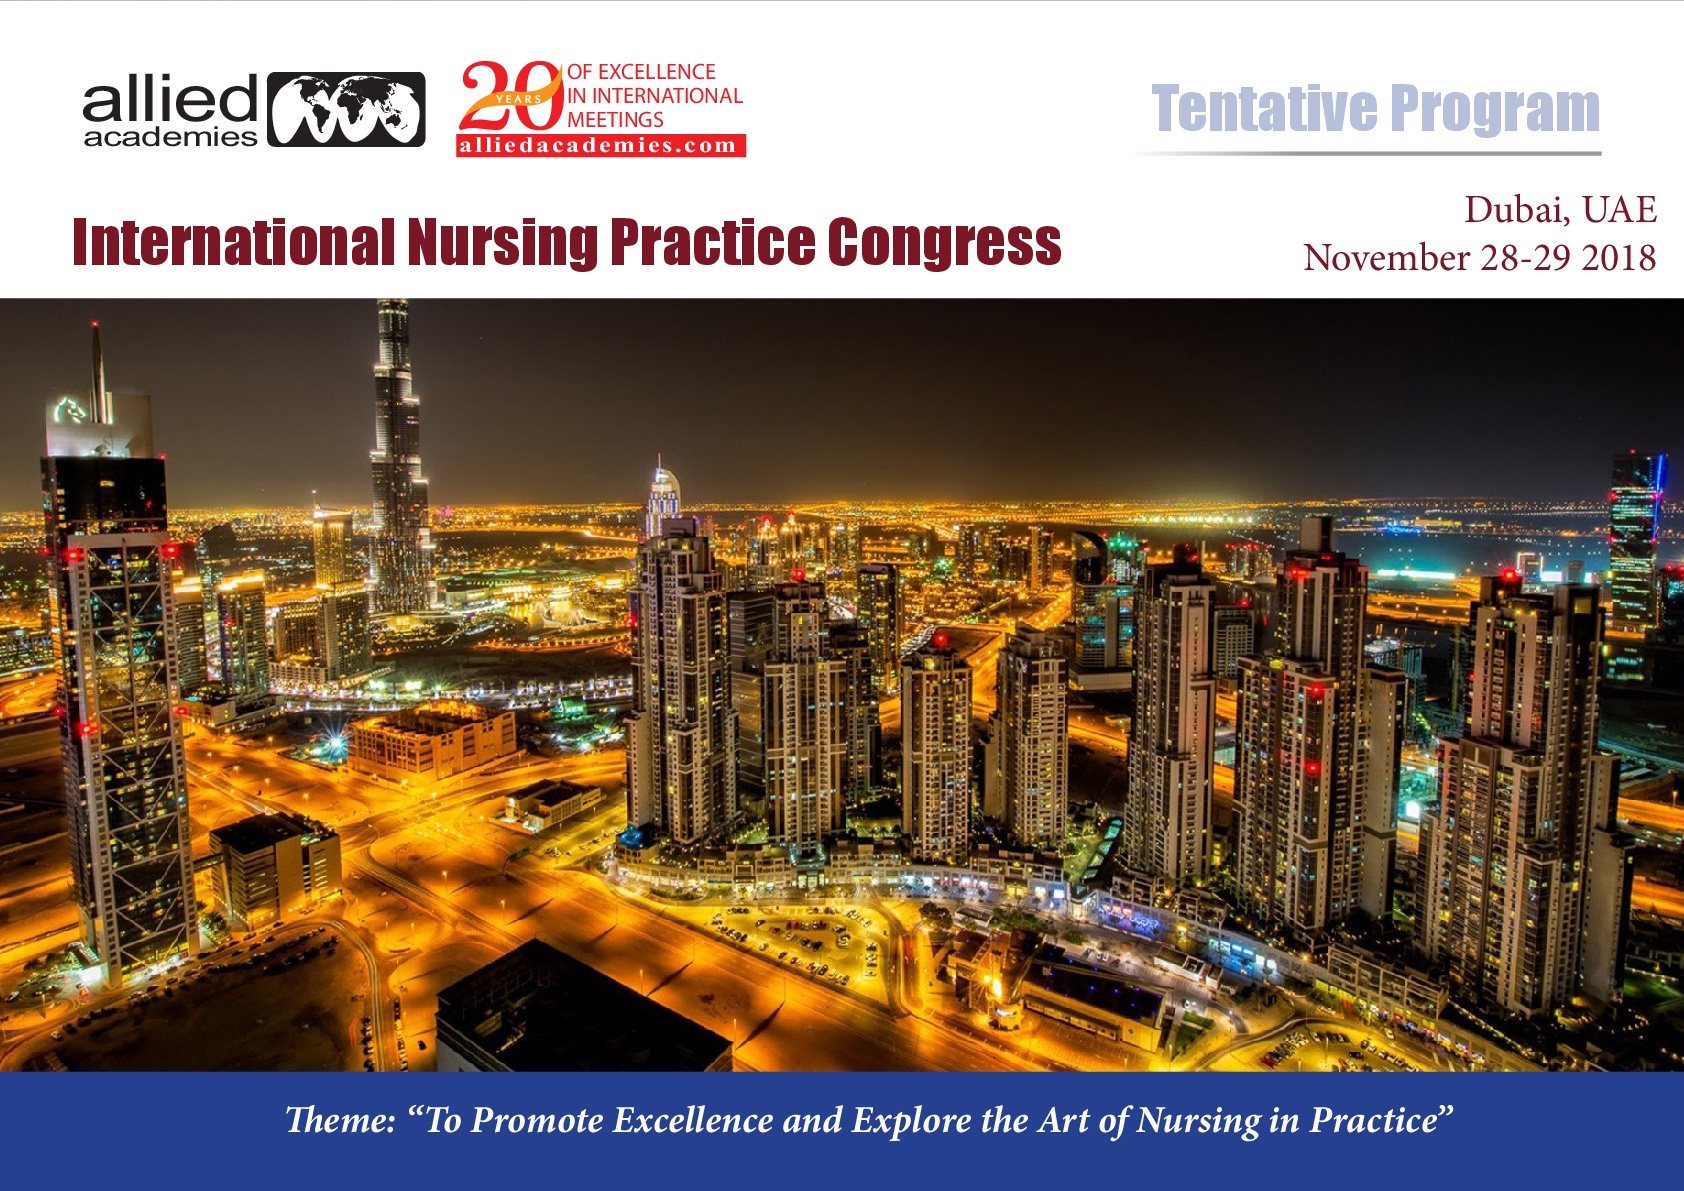 28th International Conference on Nursing Practice, Dubai, United Arab Emirates